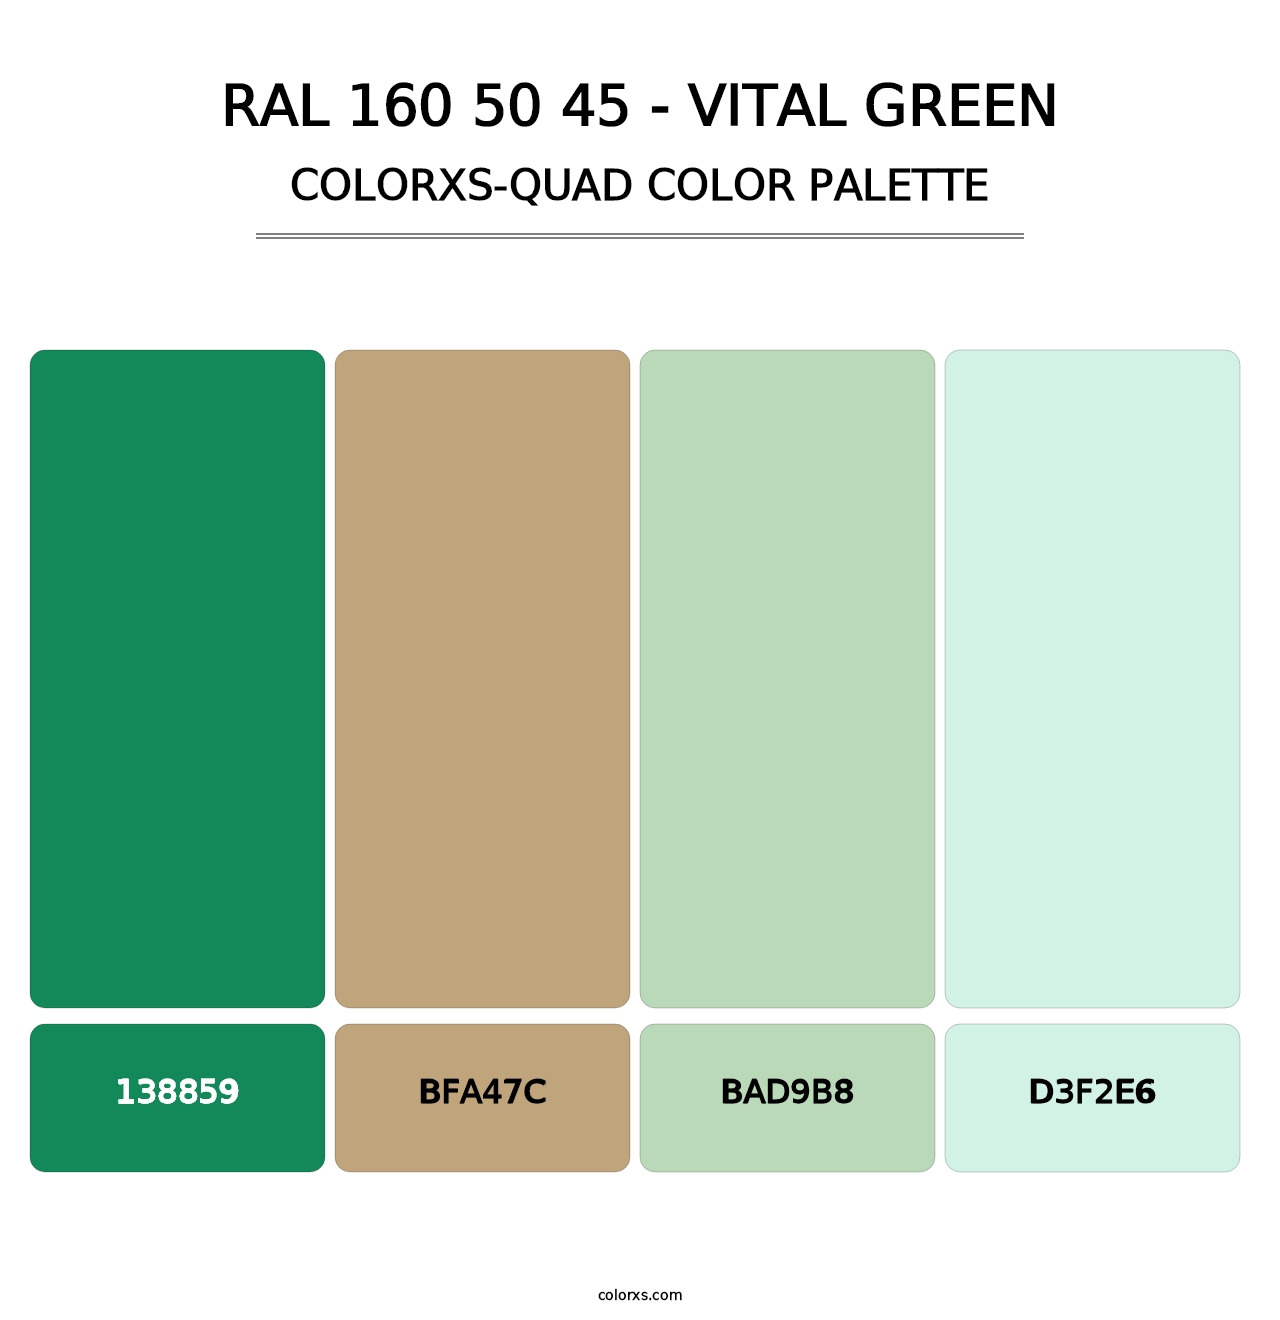 RAL 160 50 45 - Vital Green - Colorxs Quad Palette